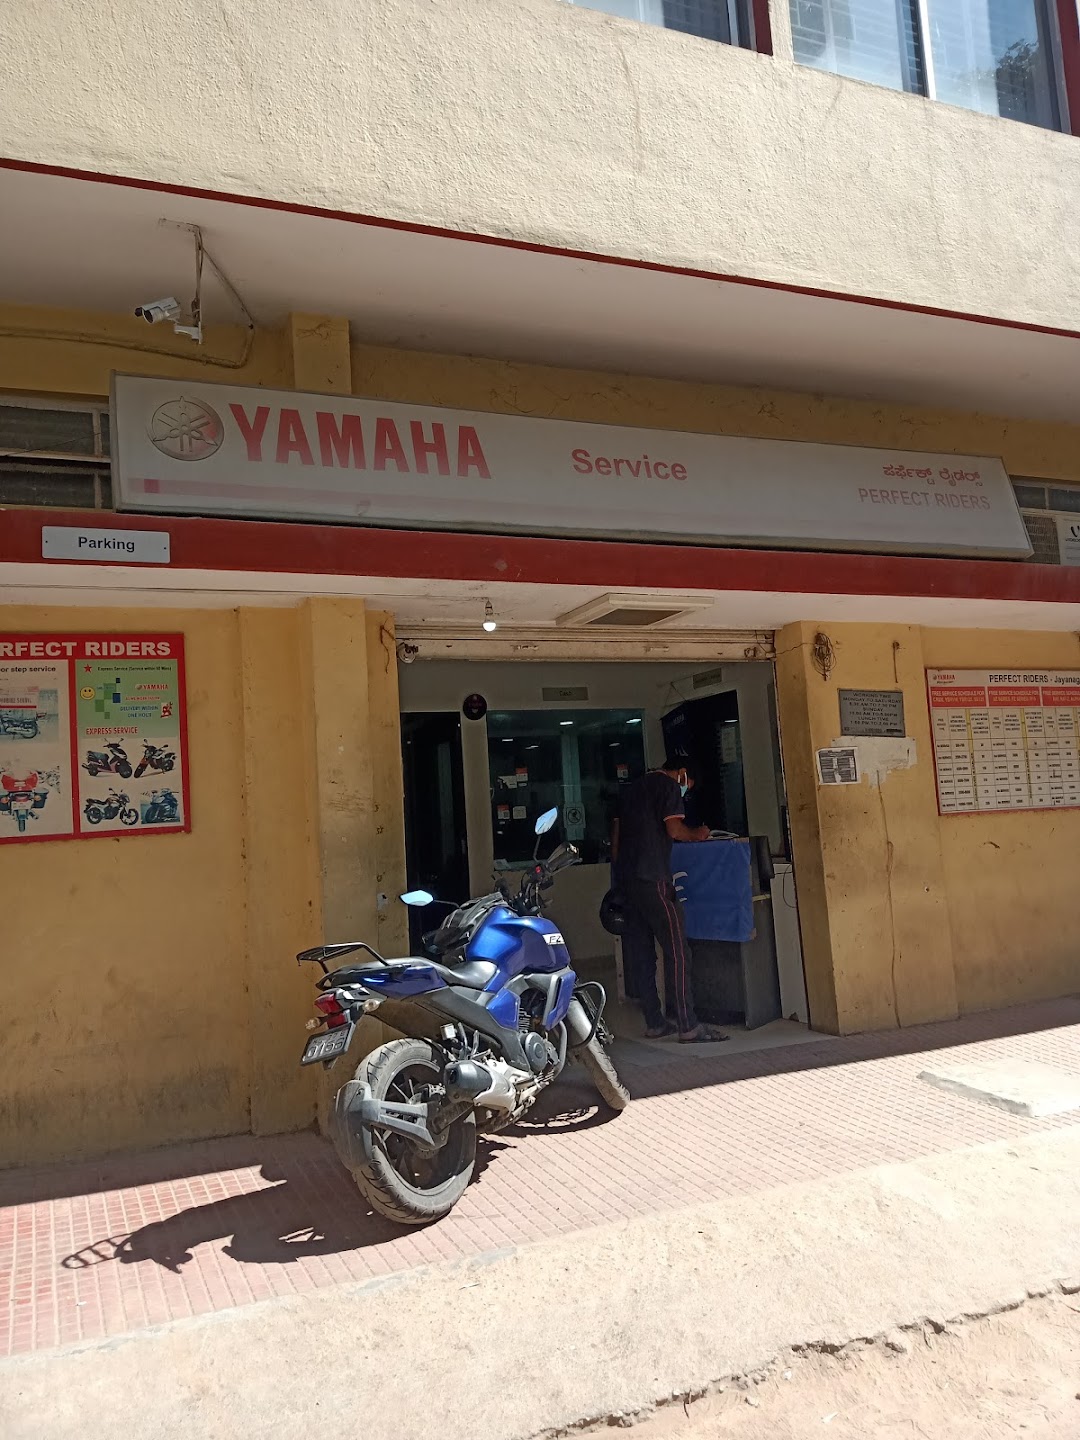 Perfect Riders Yamaha Authorised Service Center